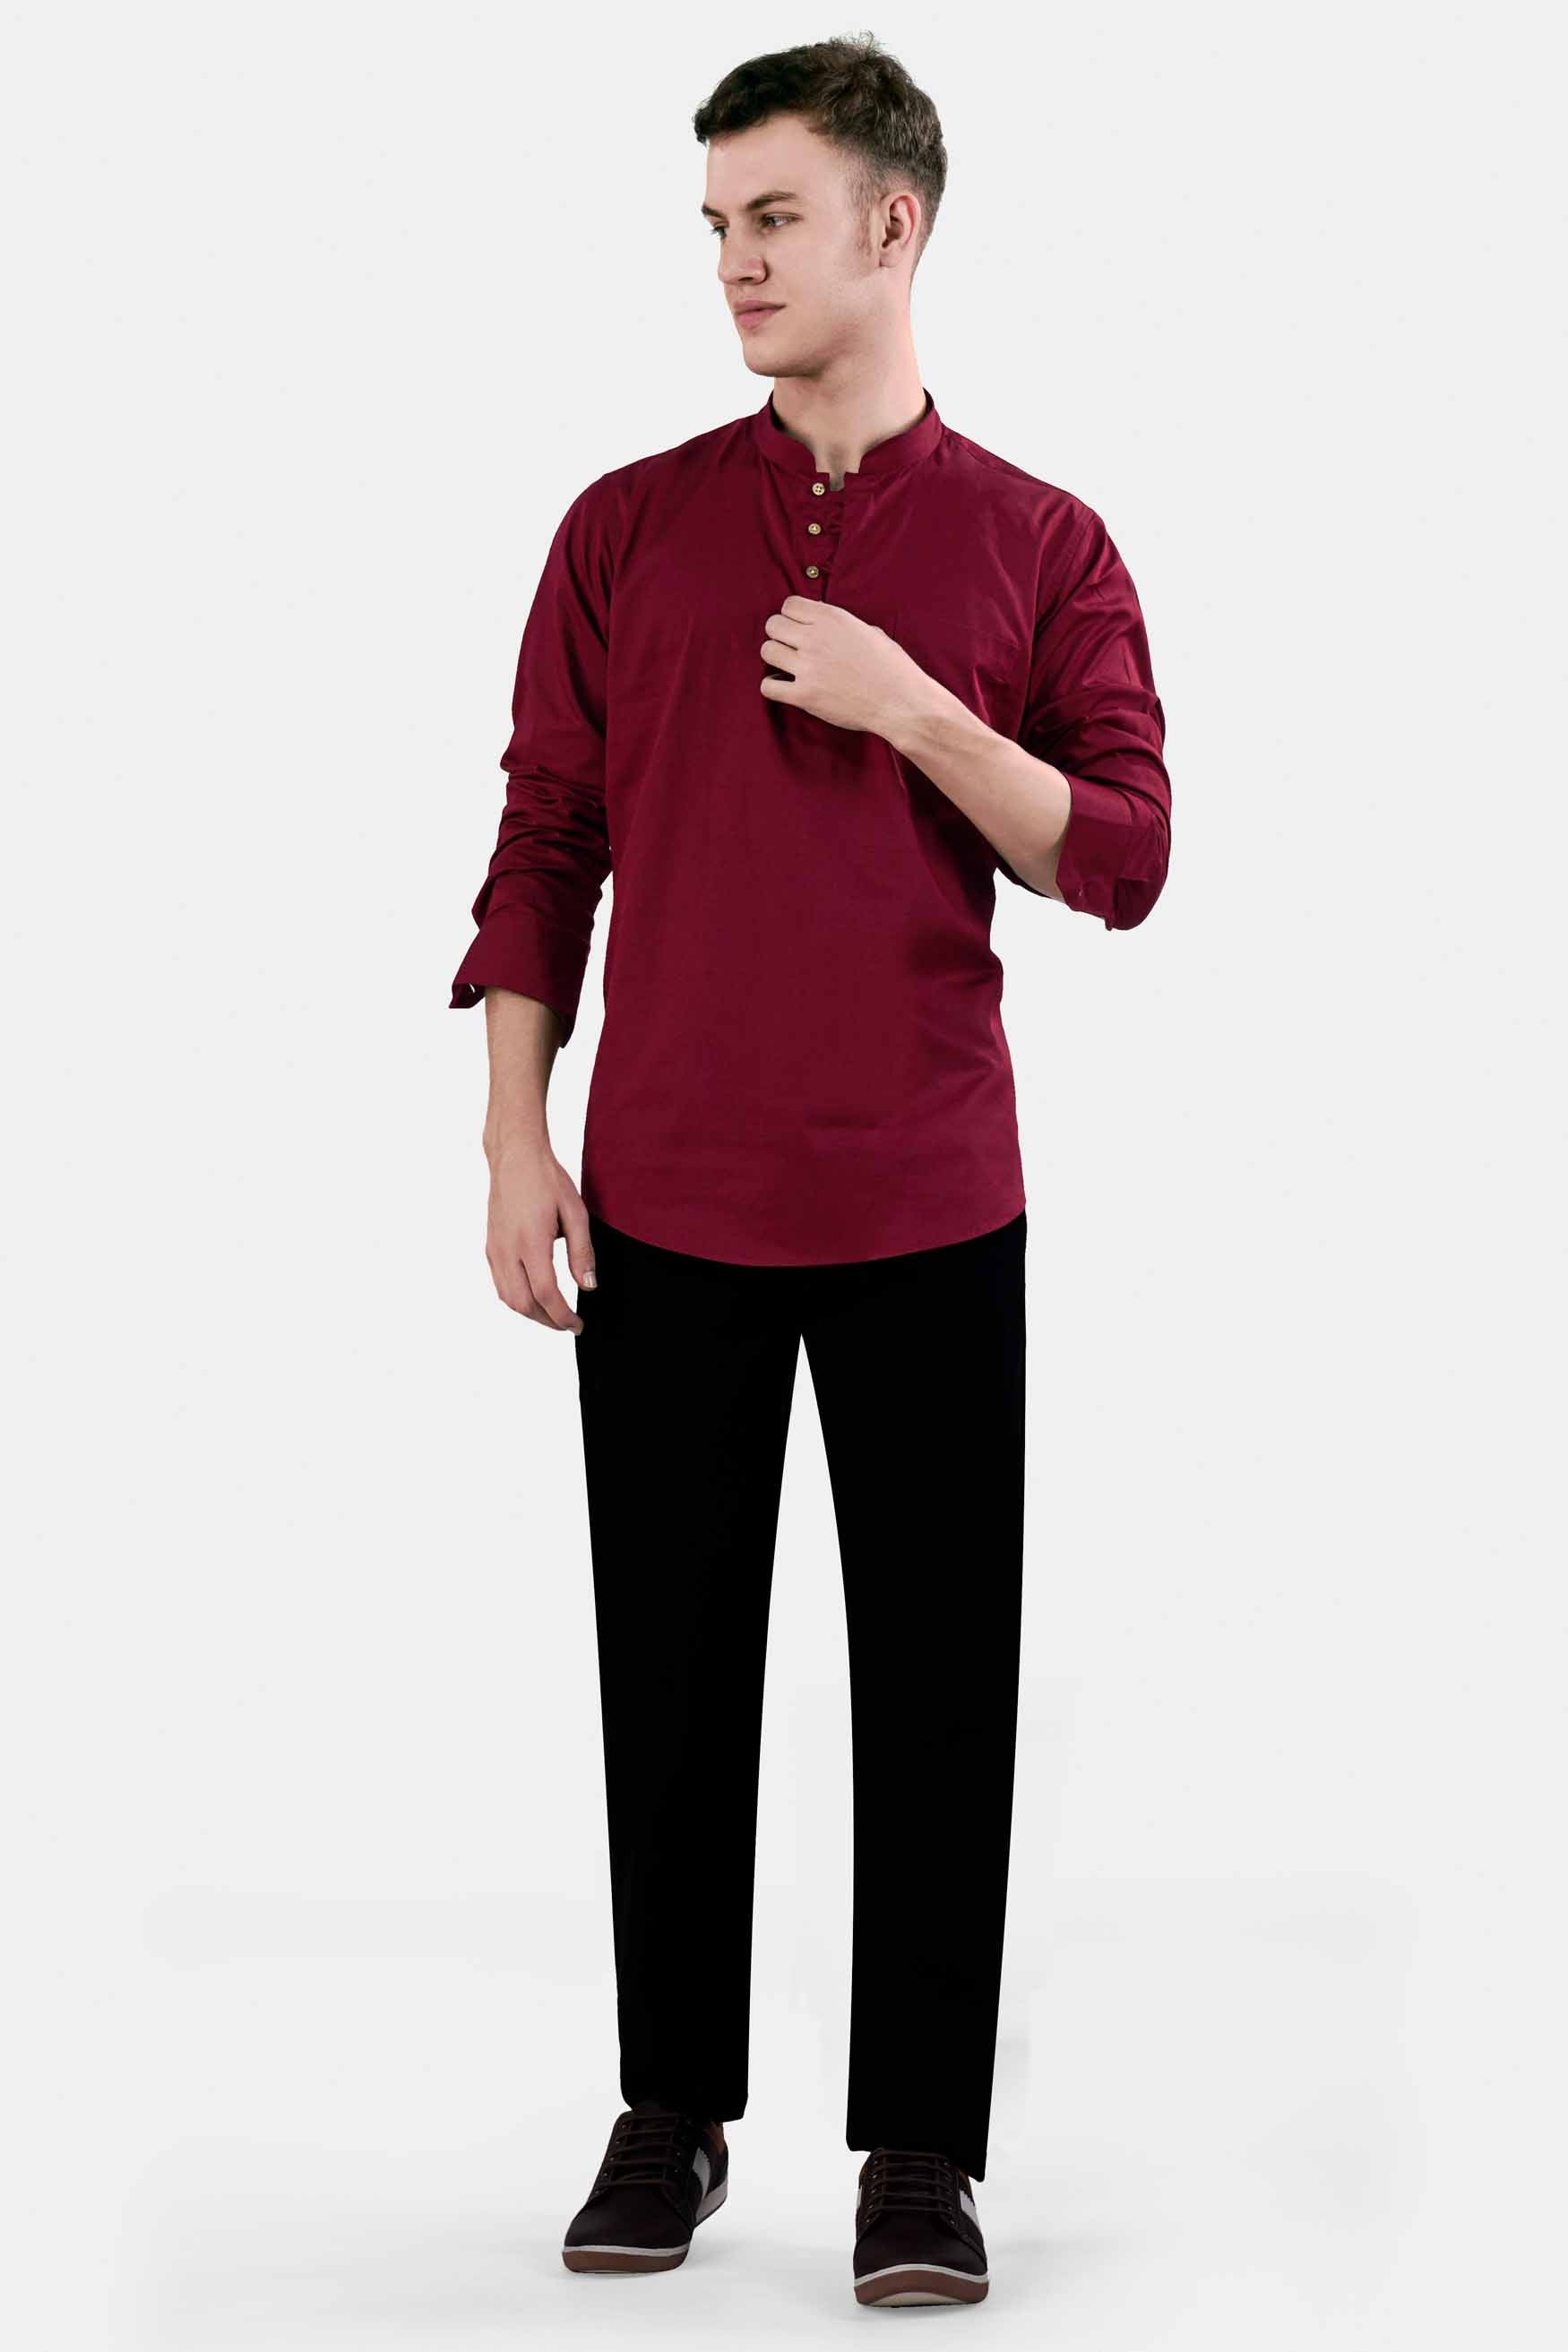 Heath Red Twill Premium Cotton Kurta Shirt